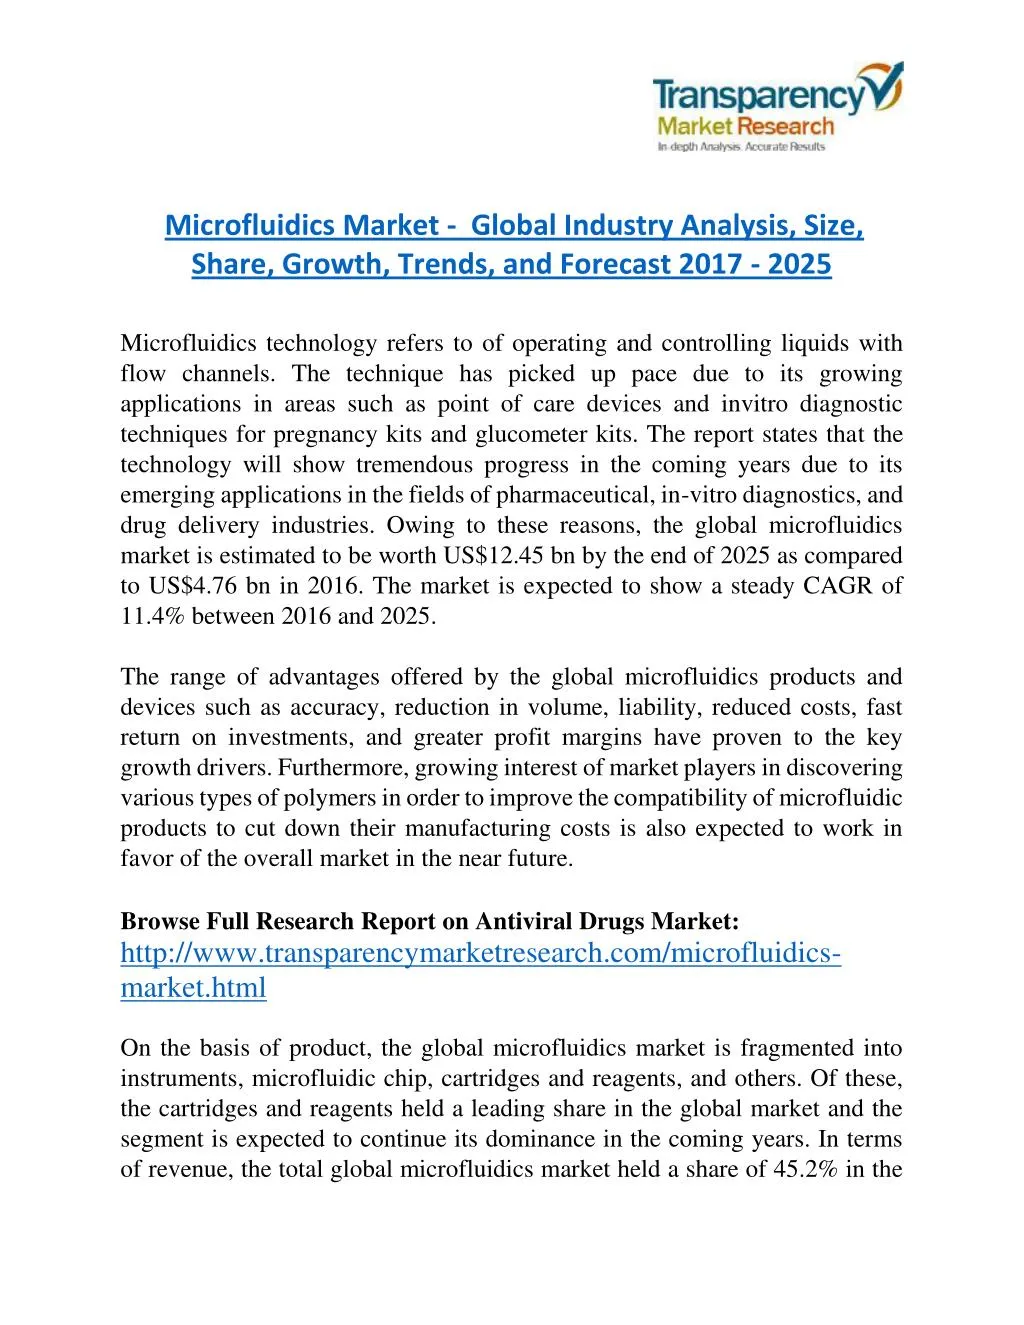 microfluidics market global industry analysis